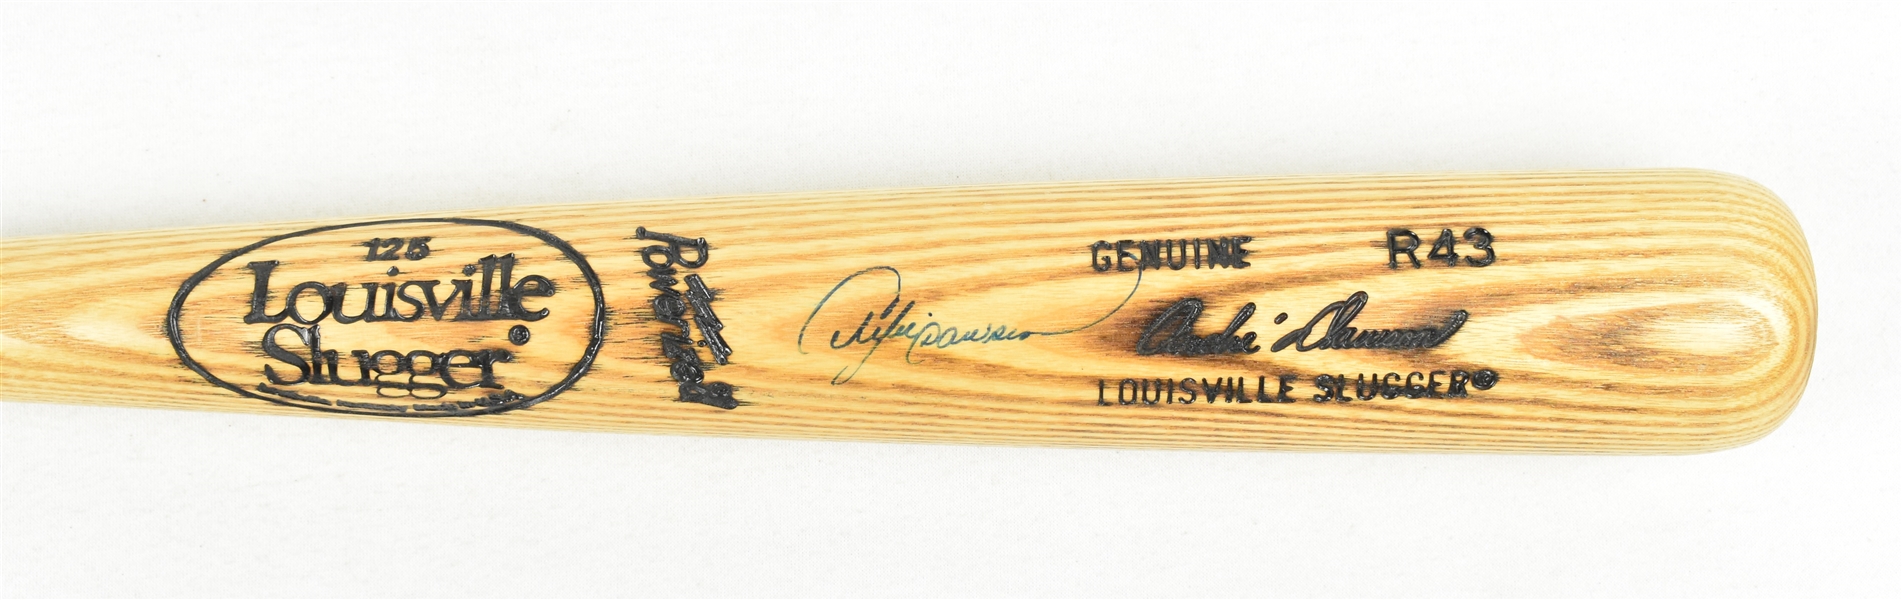 Andre Dawson Autographed Signature Model Bat